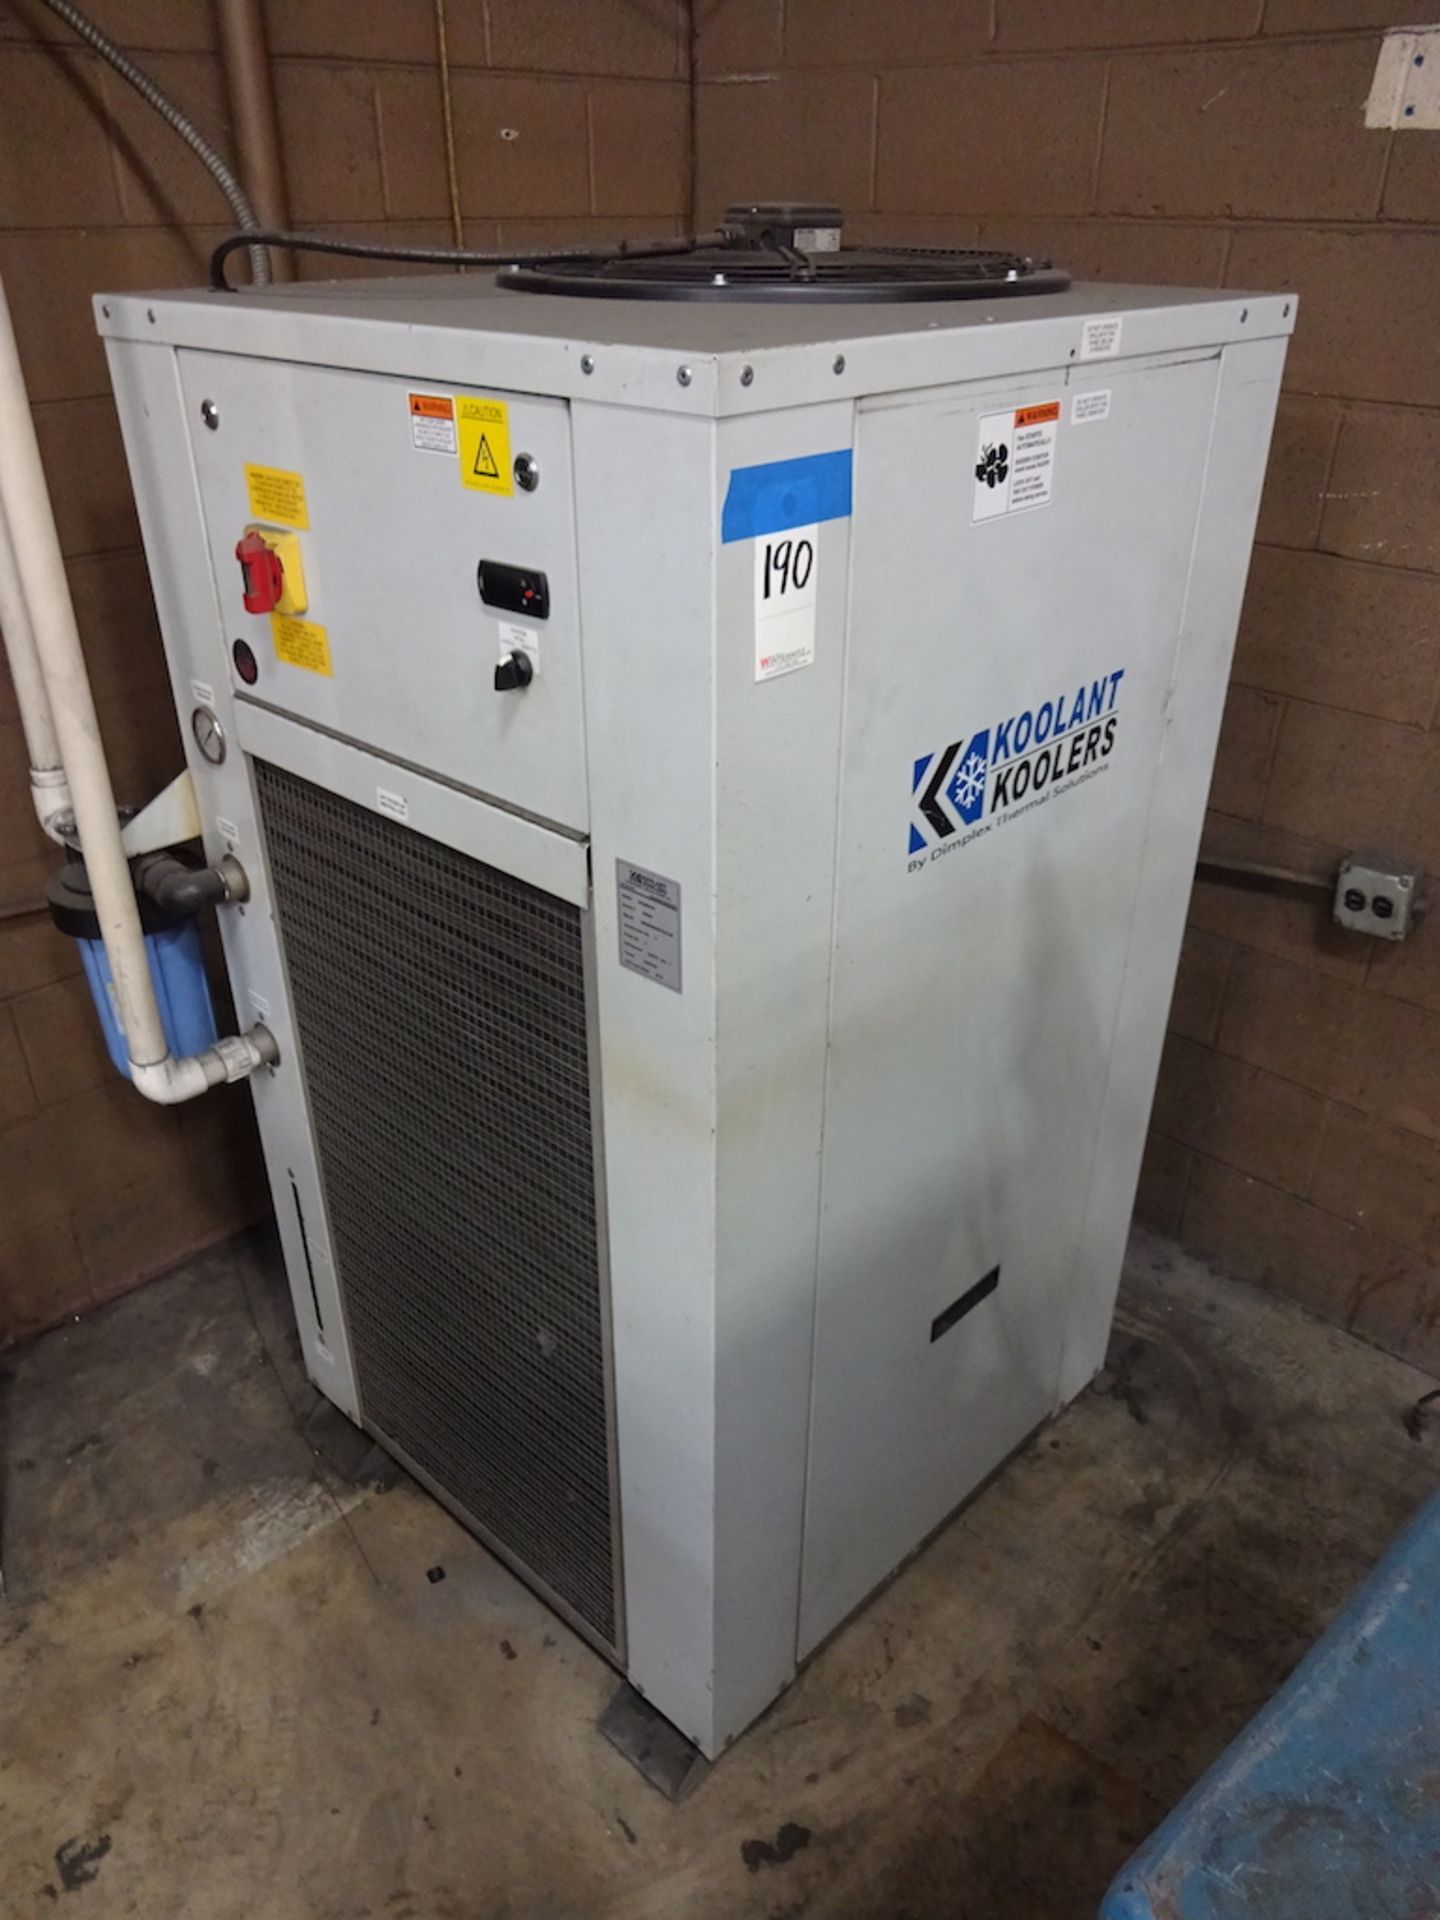 Koolant Koolers Model SV3000-W Refrigerated Air Dryer, S/N 52049, 3hp Compressor, 2HP Pump, R407C